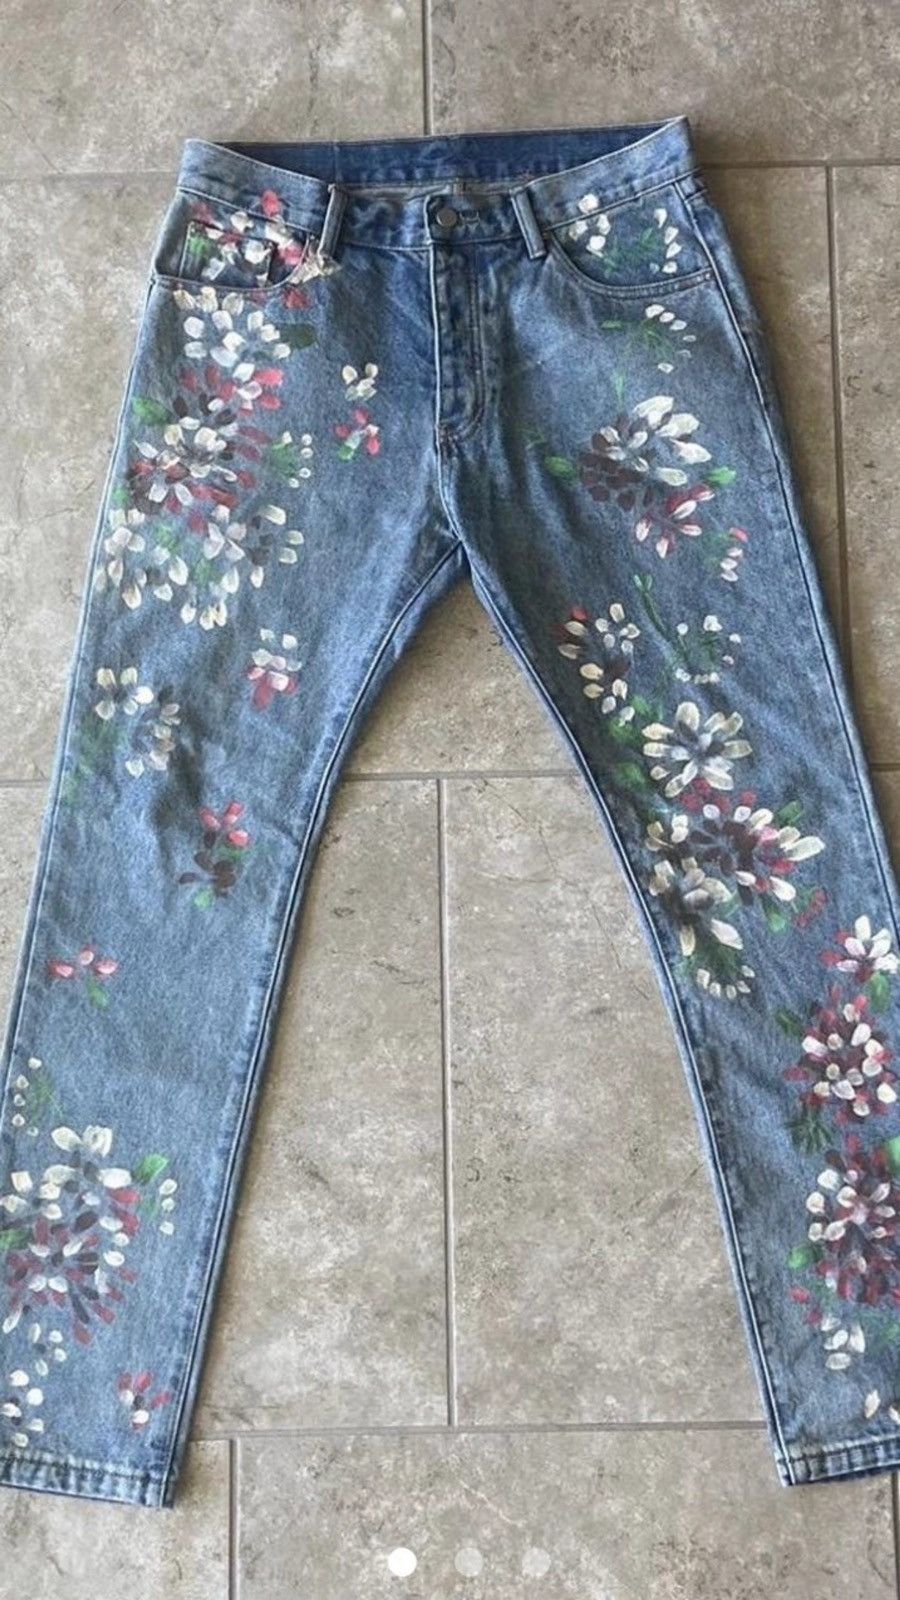 MNML MNML floral jeans | Grailed